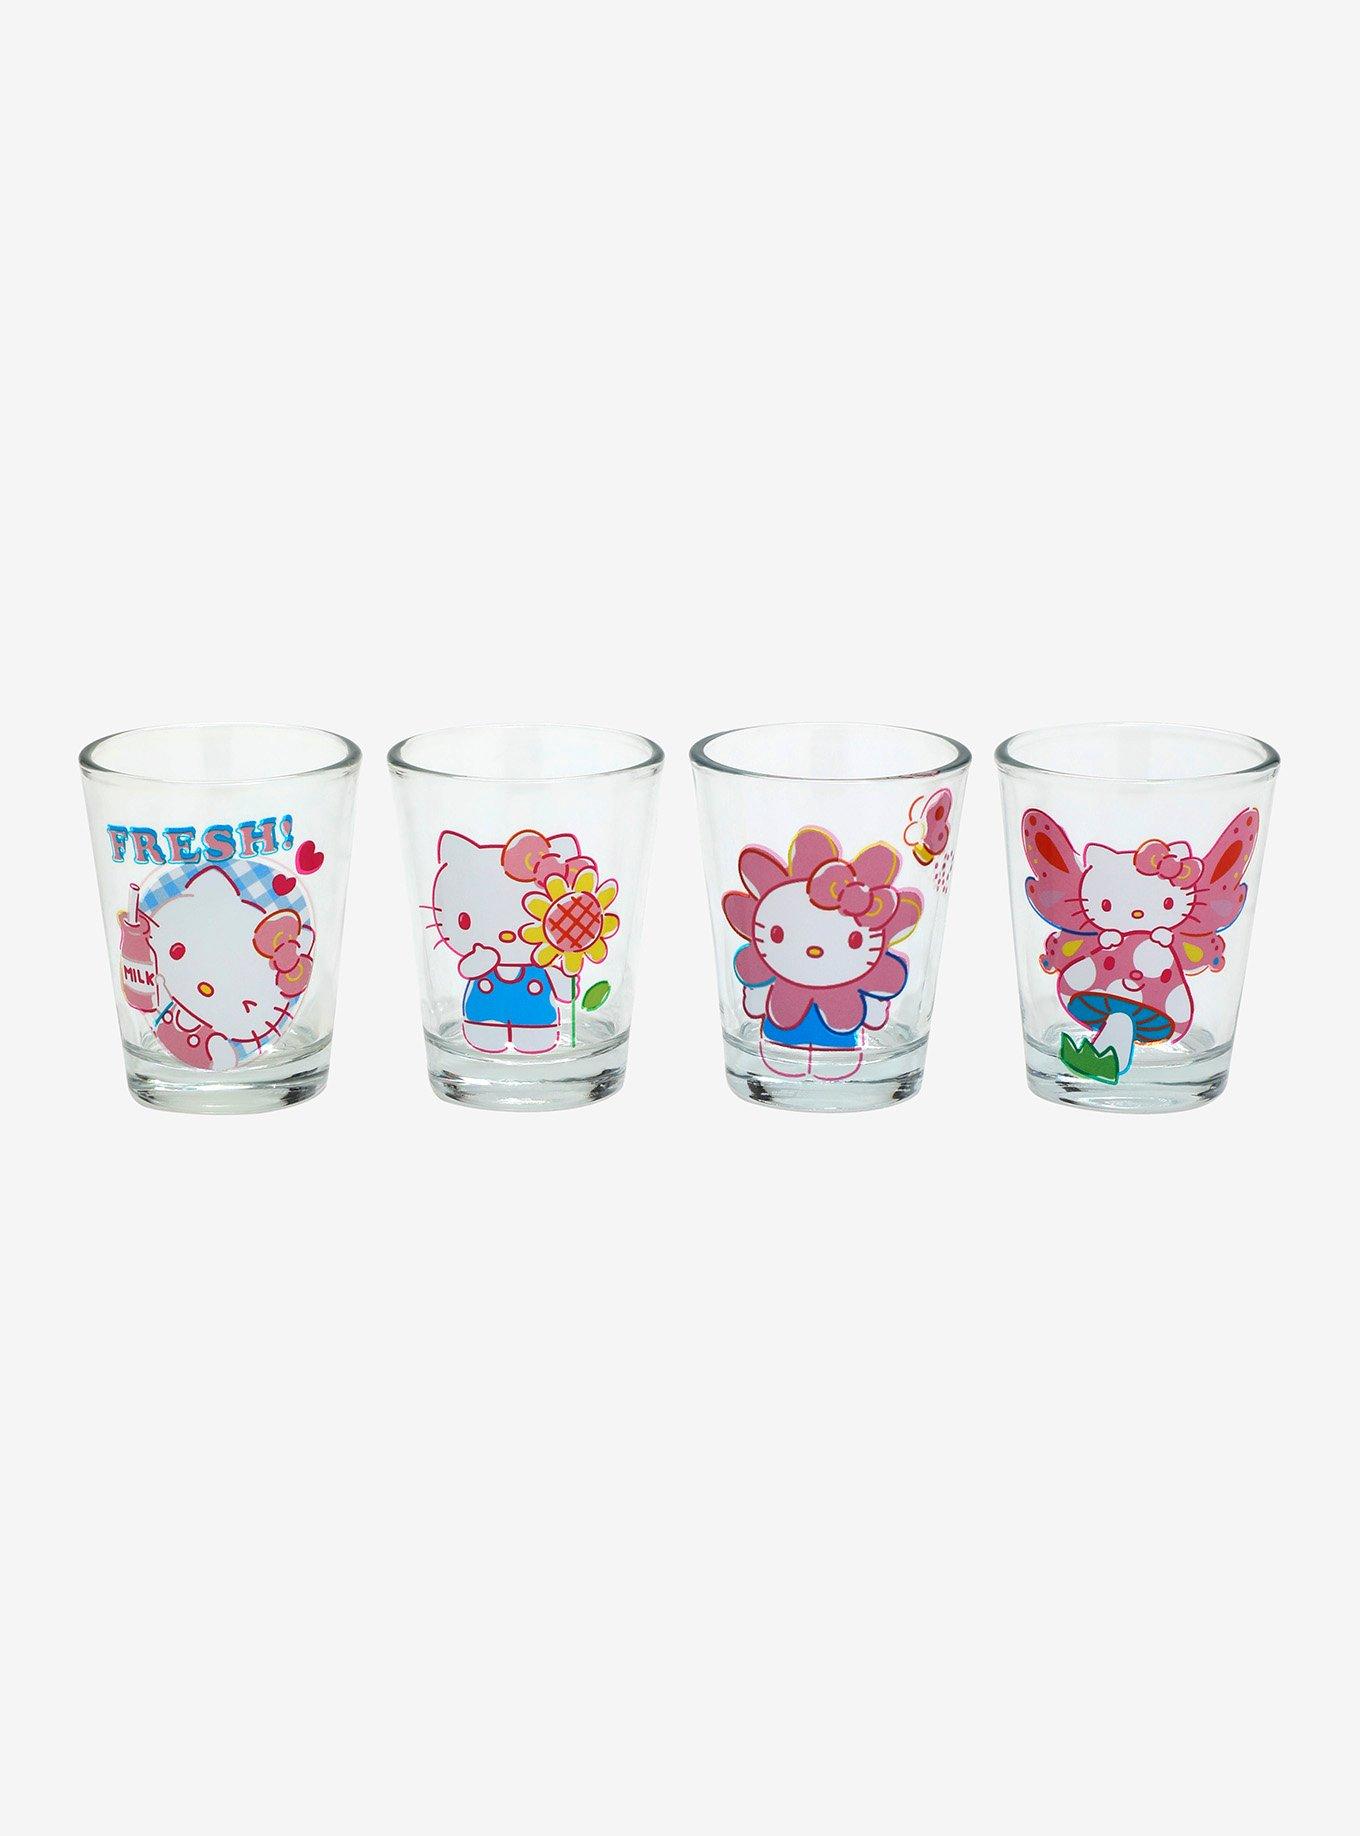 Sanrio Hello Kitty Faces 1.5-Ounce Mini Shot Glasses | Set of 4